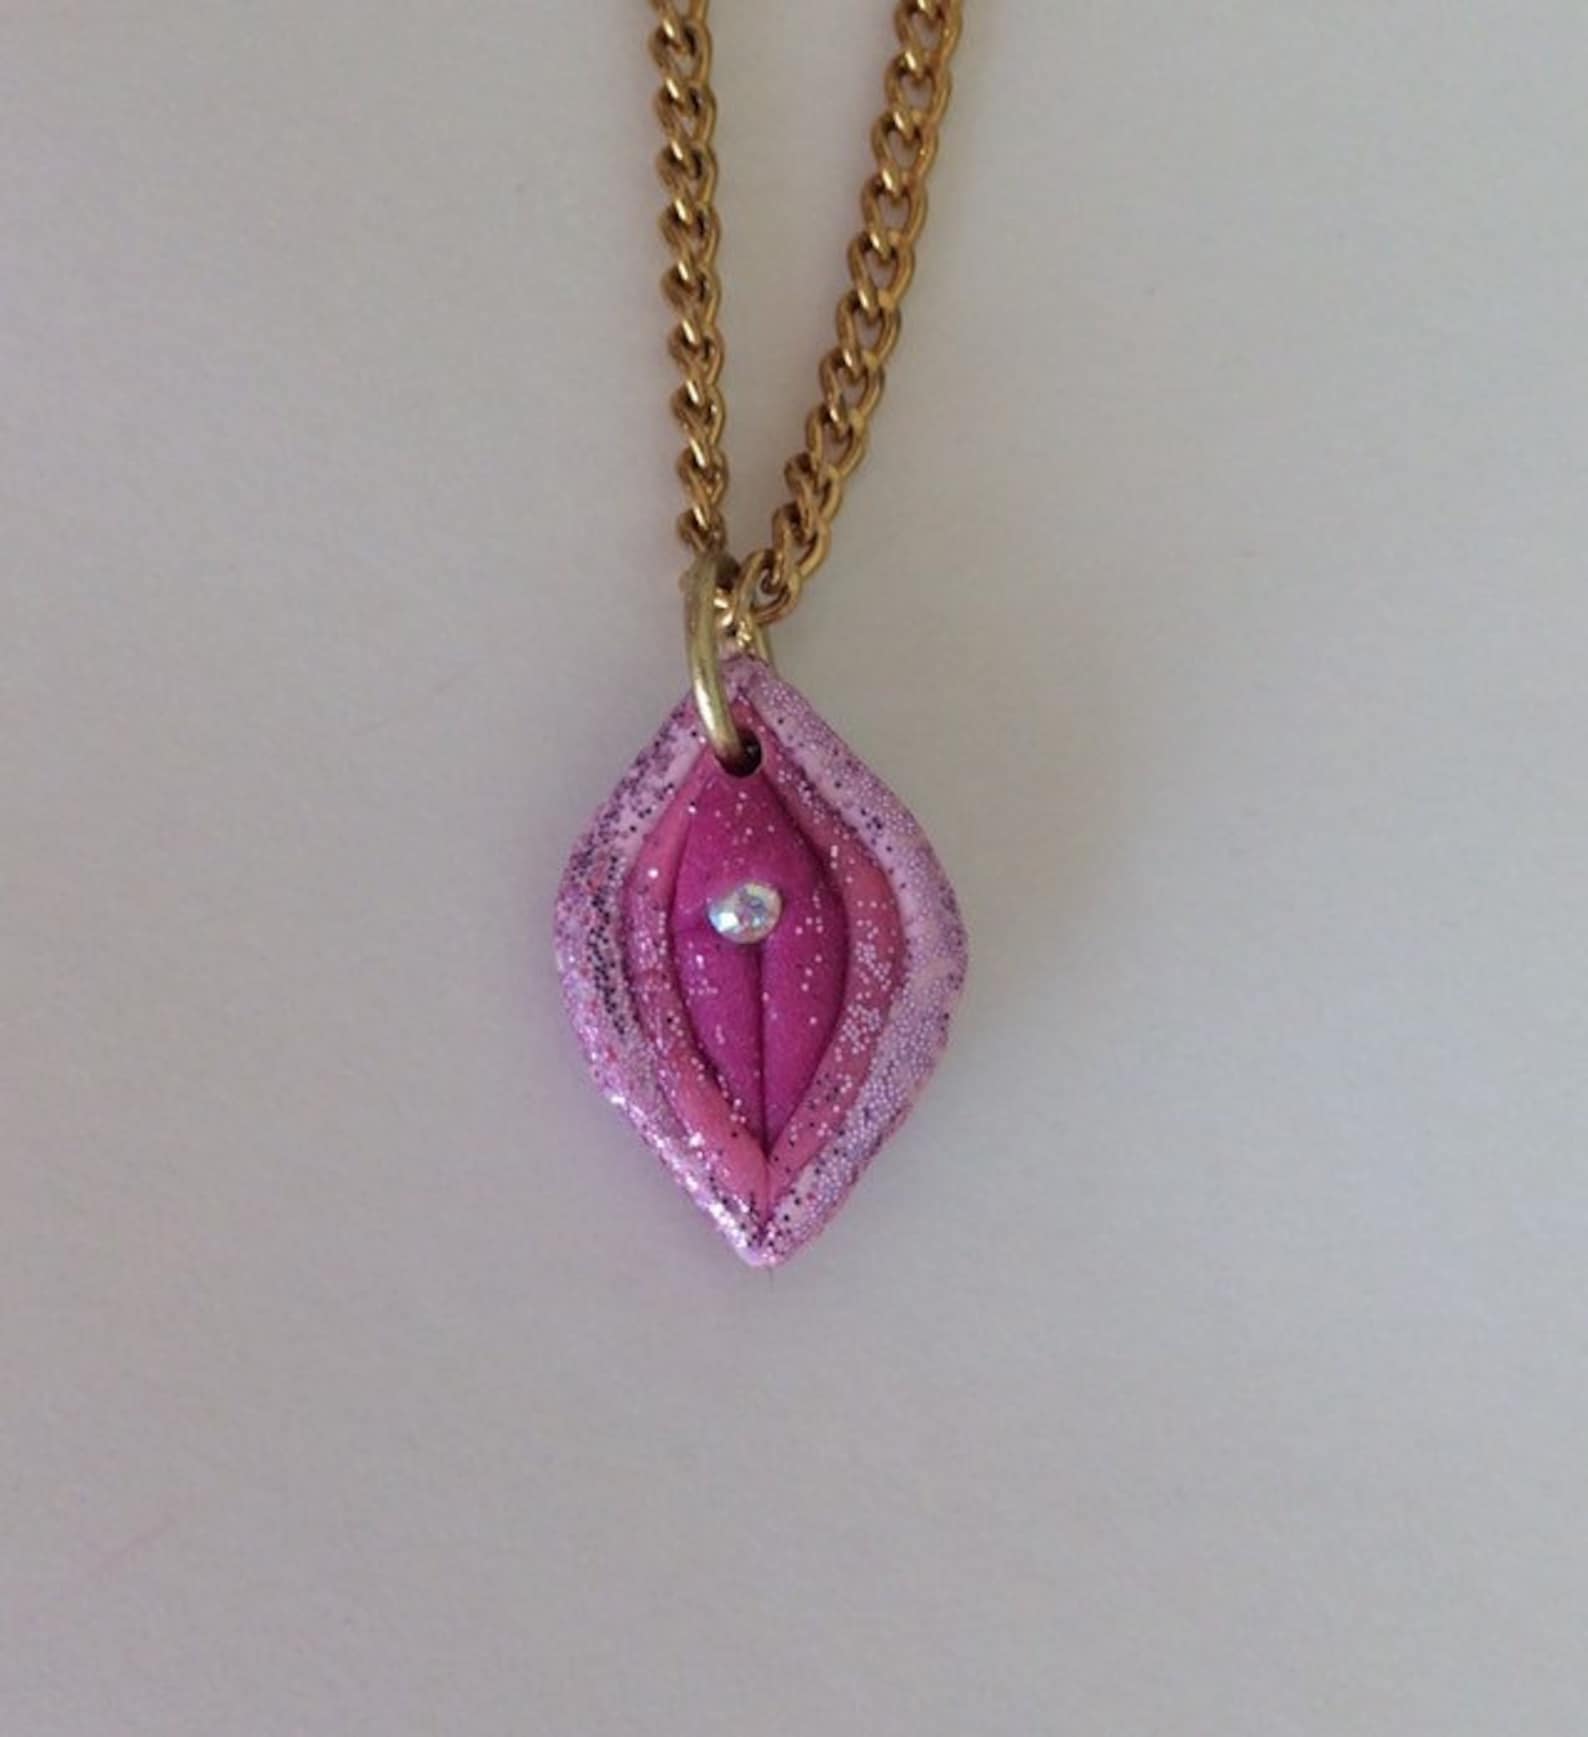 Vagina Jewelry Vagina Charms Vagina Pendants Yoni Jewelry Genitalia